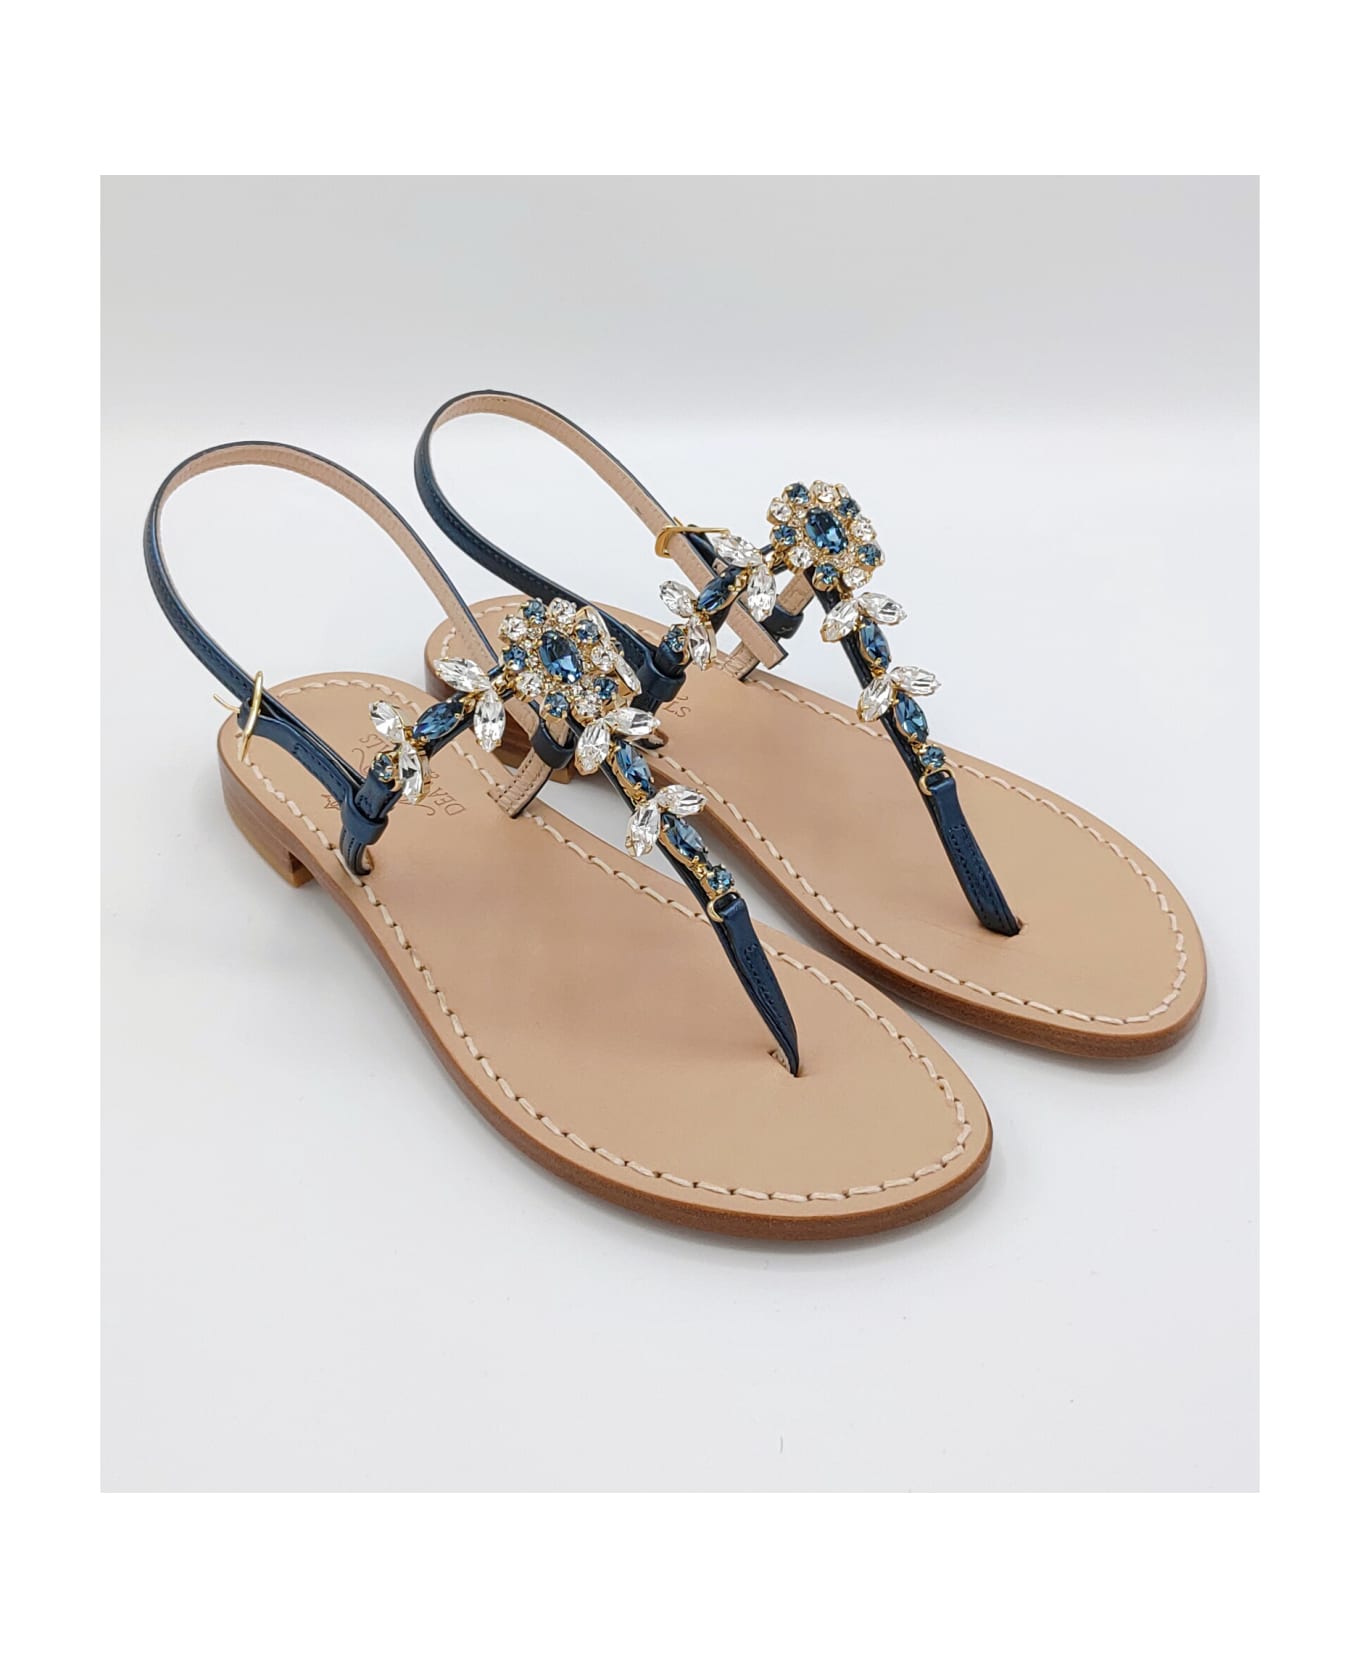 Dea Sandals Marina Grande Flip Flops Thong Sandals - navy blue, crystal